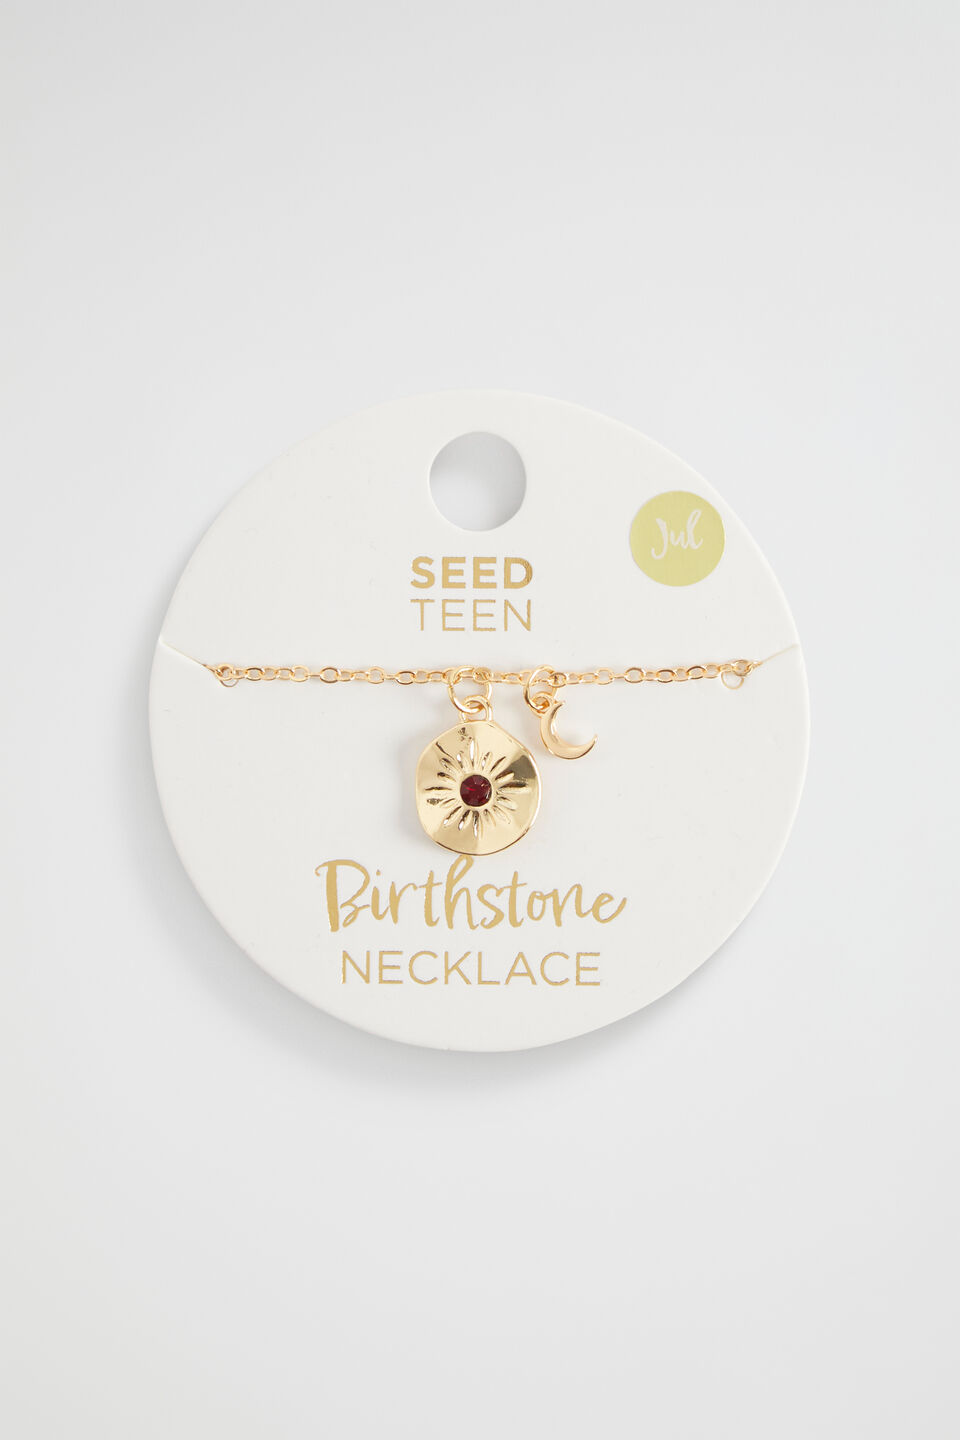 Birthstone Necklace  July